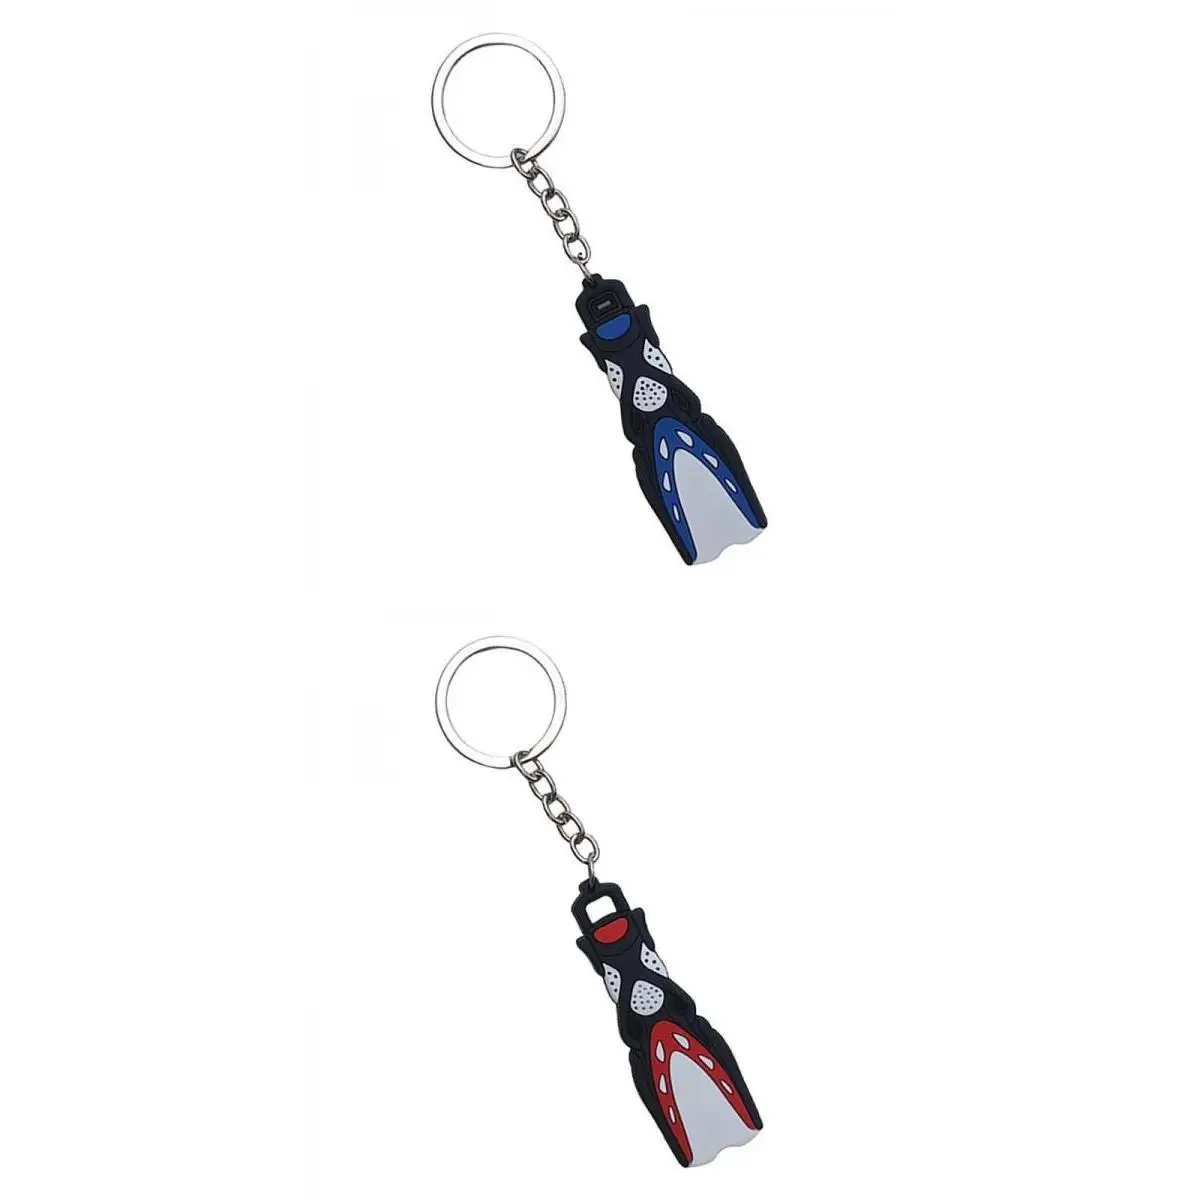 Pack of 2 Mini Palm Silicone Keychain, Handbag Keychain, Design Pendant Bag Accessories